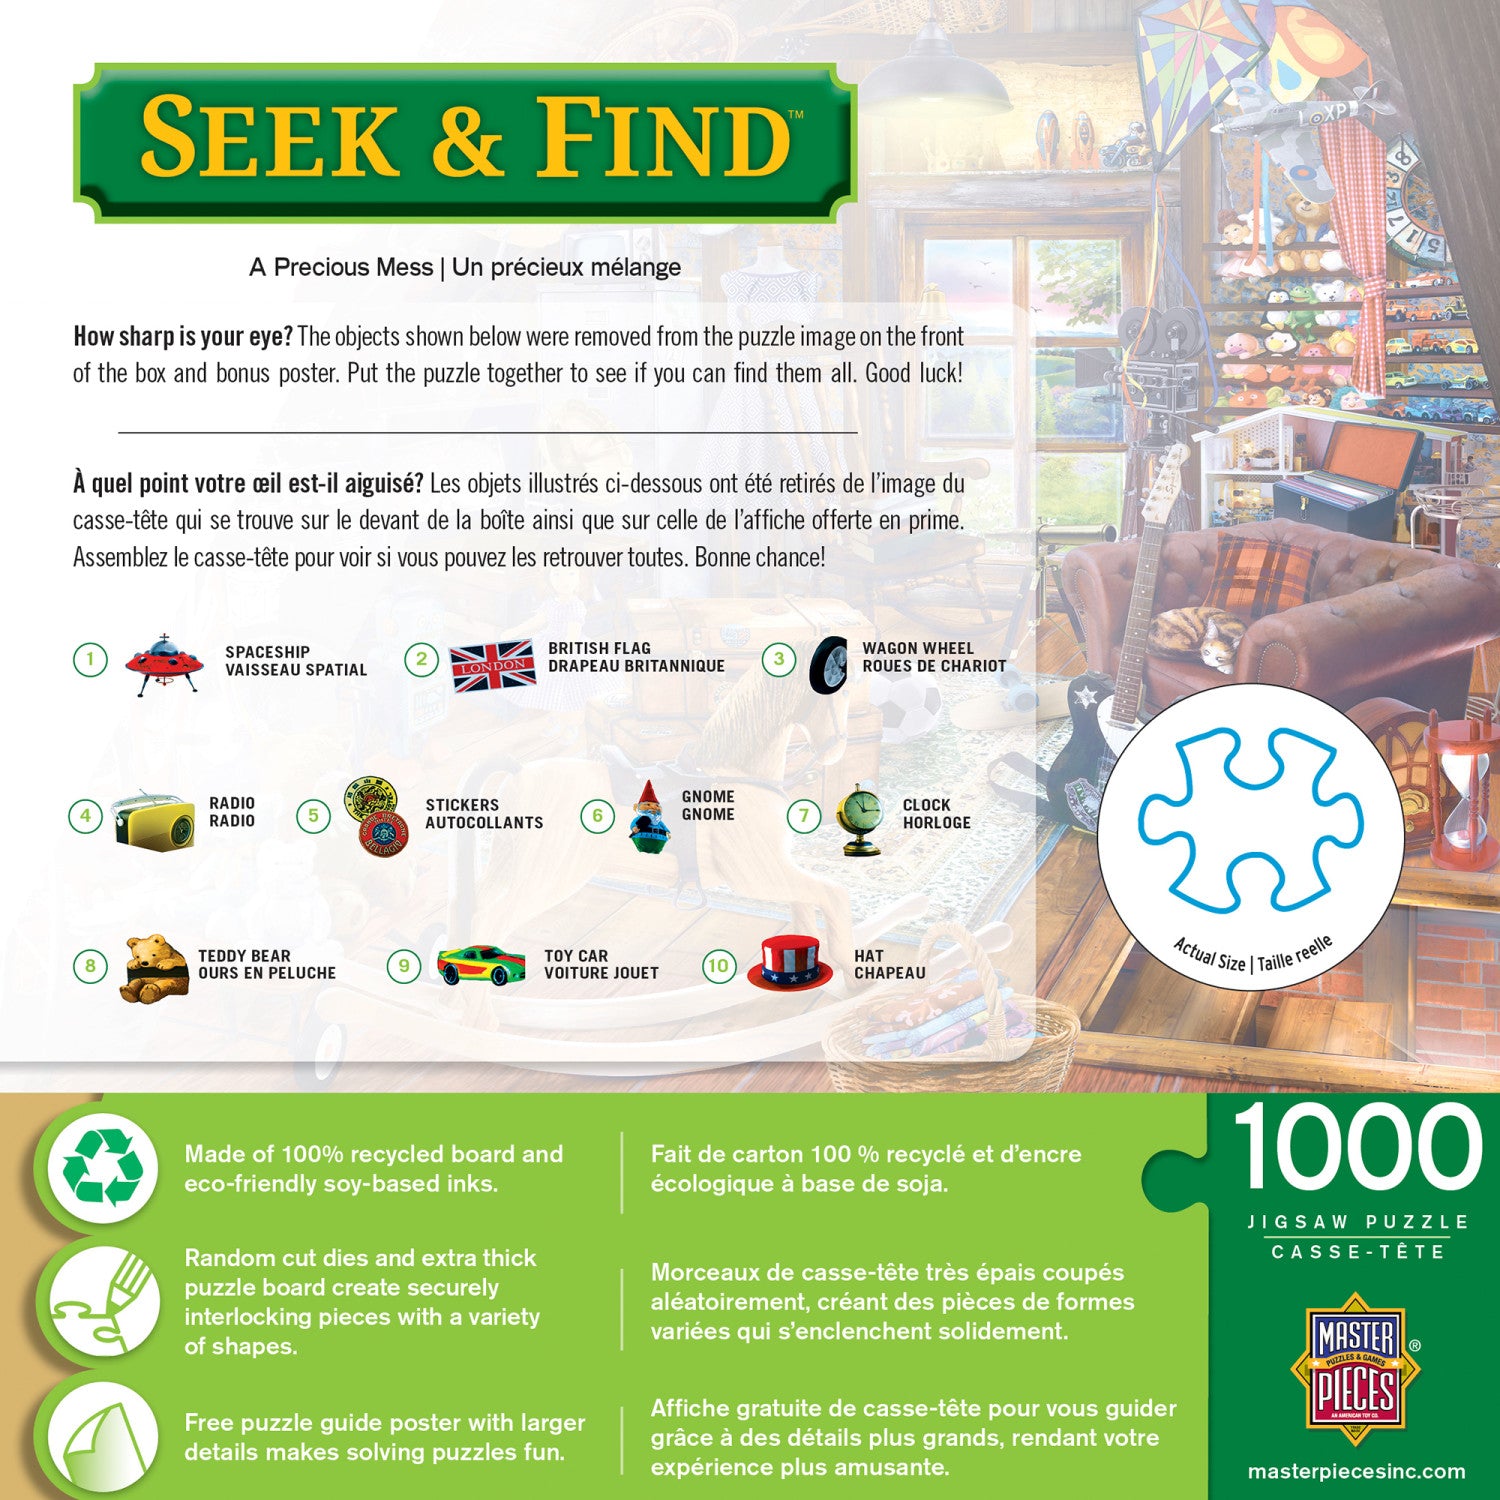 Seek & Find - A Precious Mess 1000 Piece Puzzle